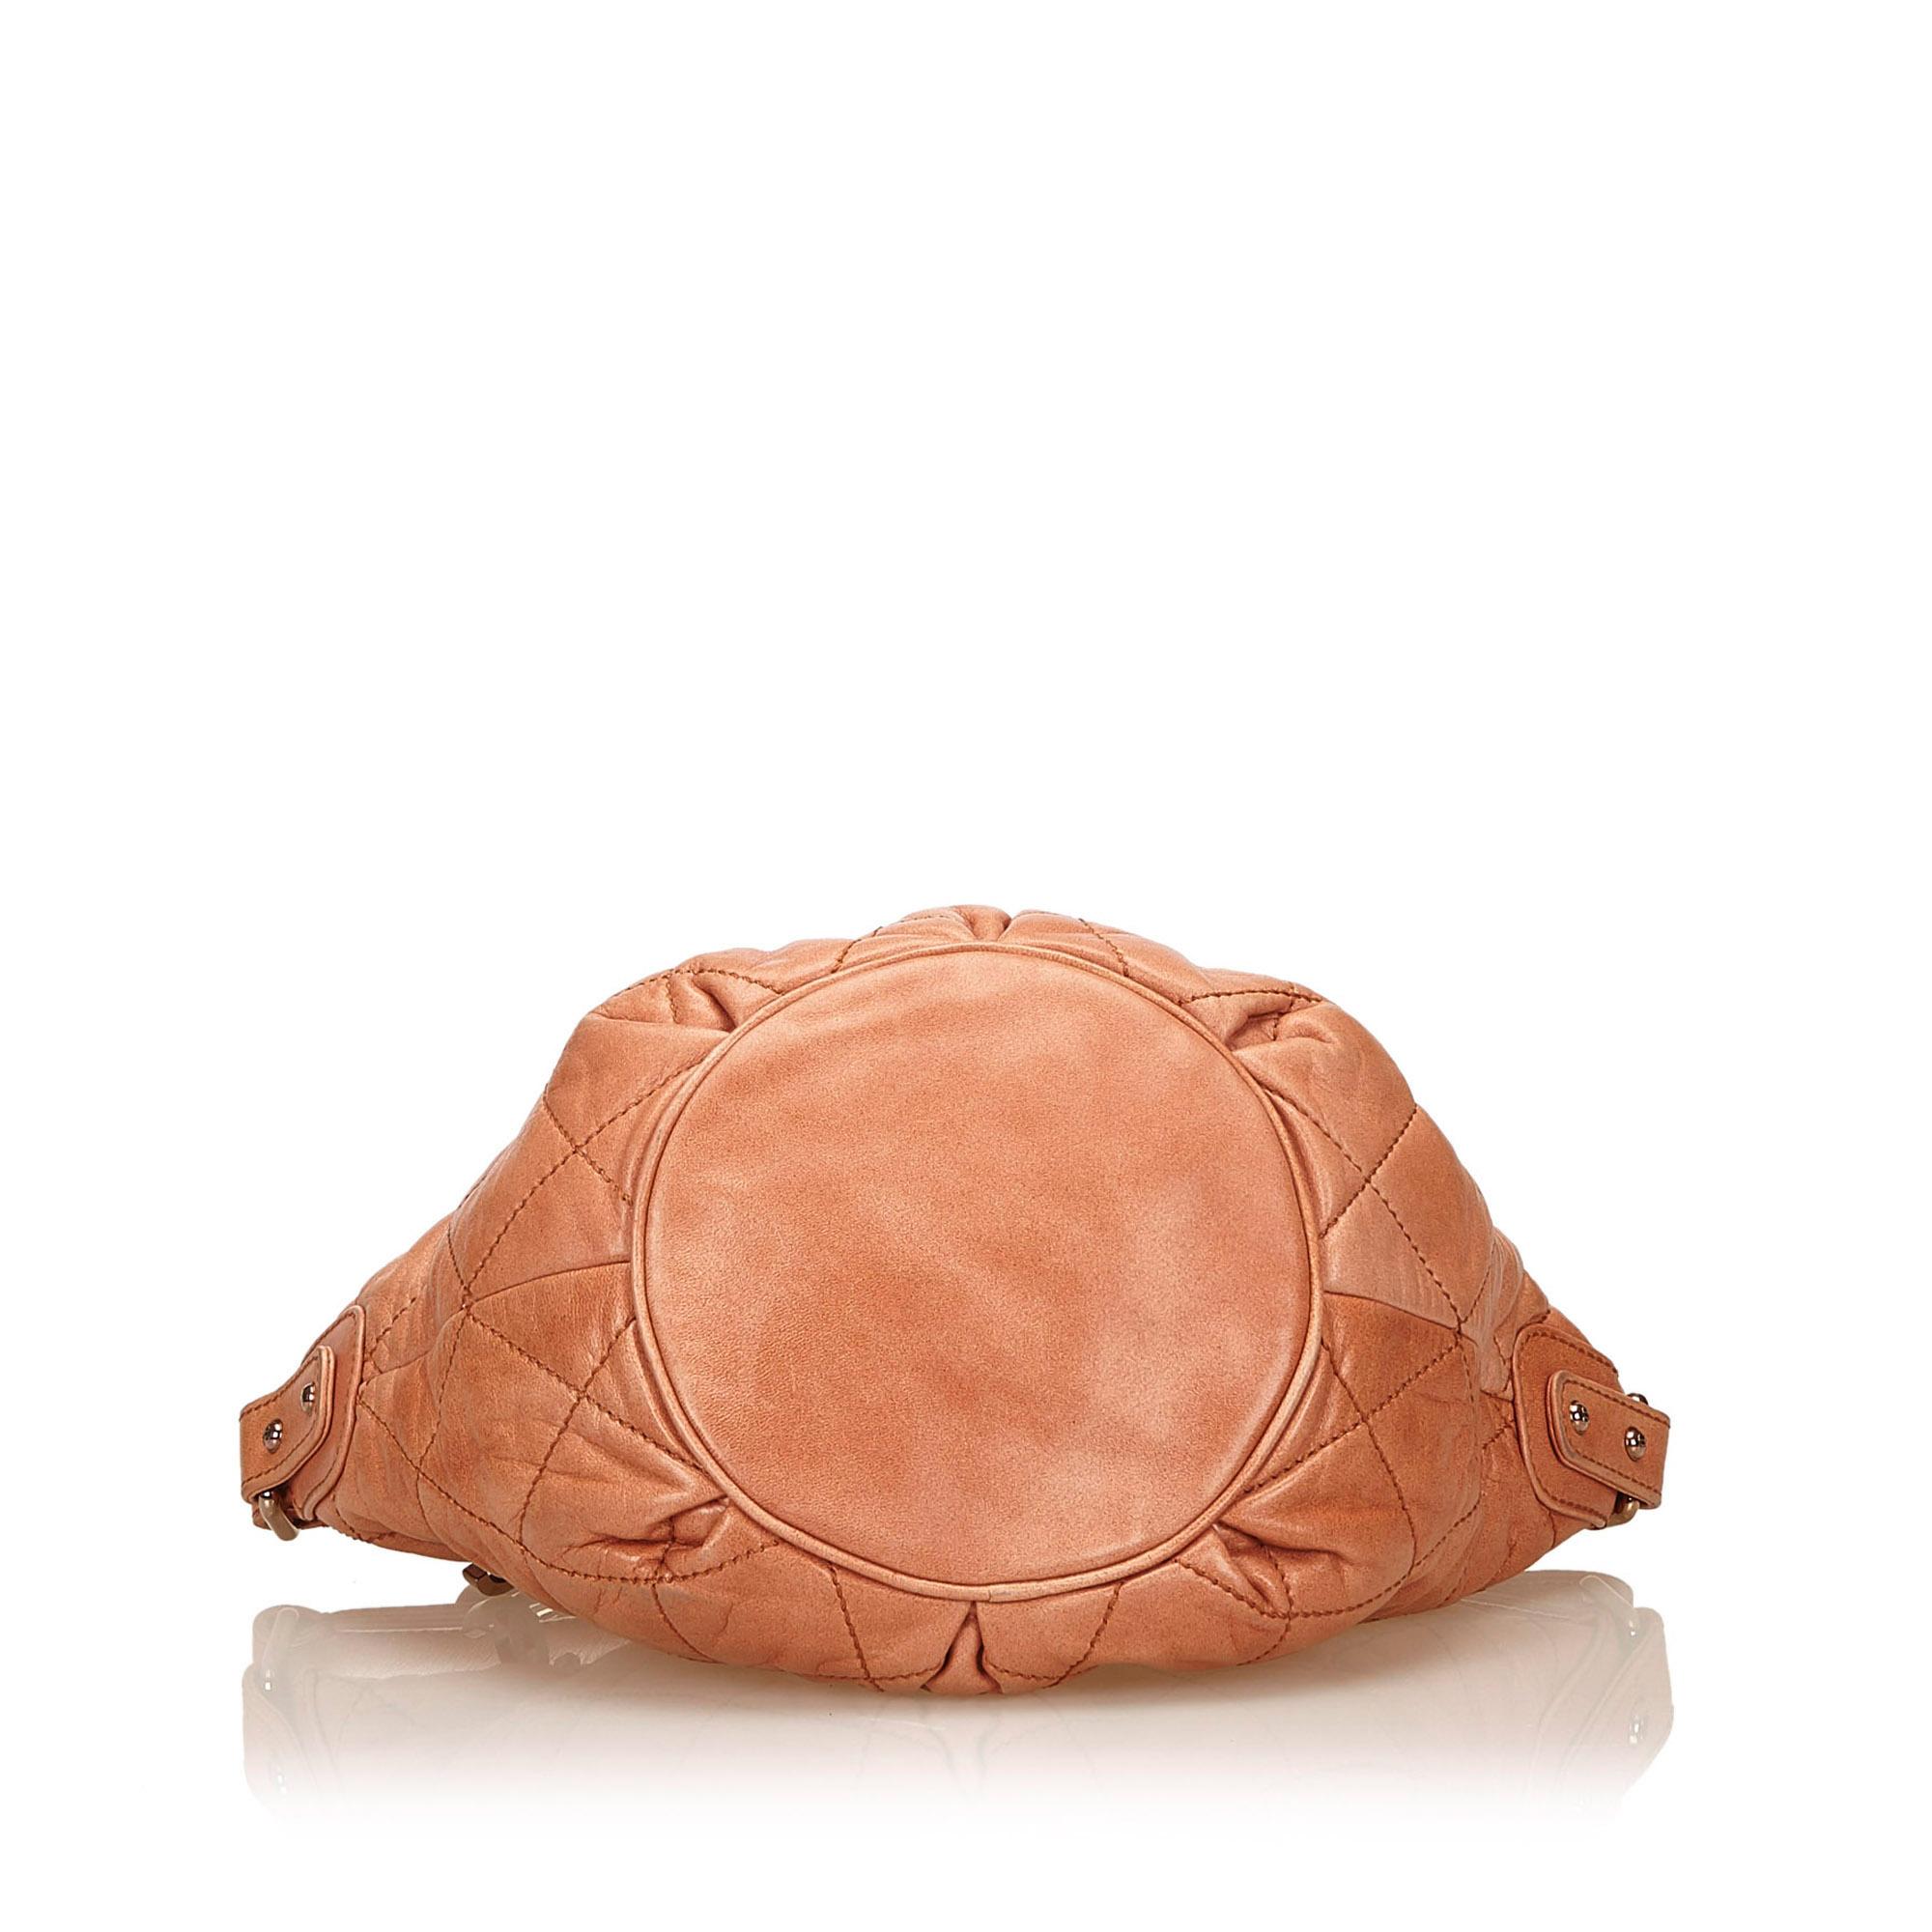 Vintage Authentic Chanel Leather Matelasse Surpique Handbag w Dust Bag MEDIUM  In Good Condition For Sale In Orlando, FL